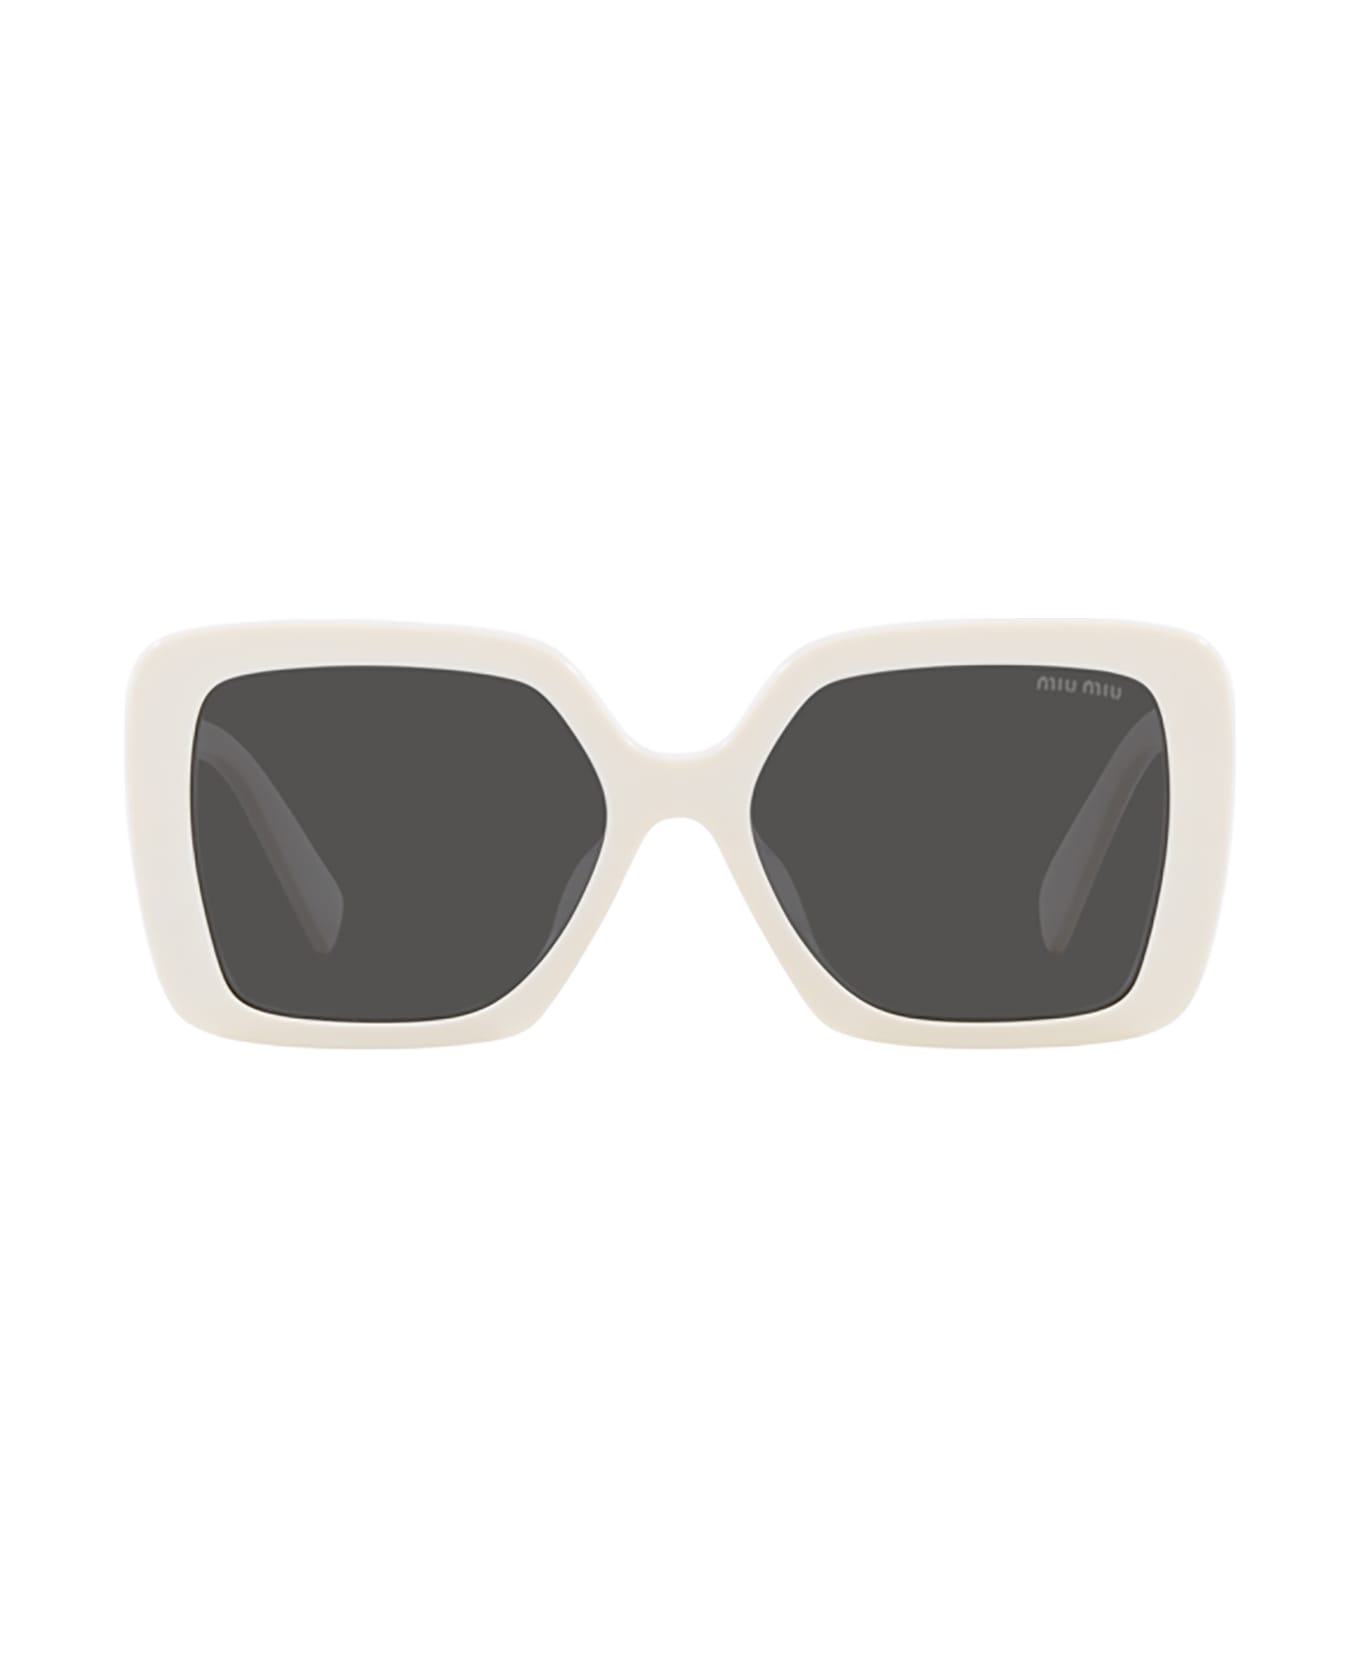 Miu Miu Eyewear Mu 10ys White Sunglasses - White サングラス